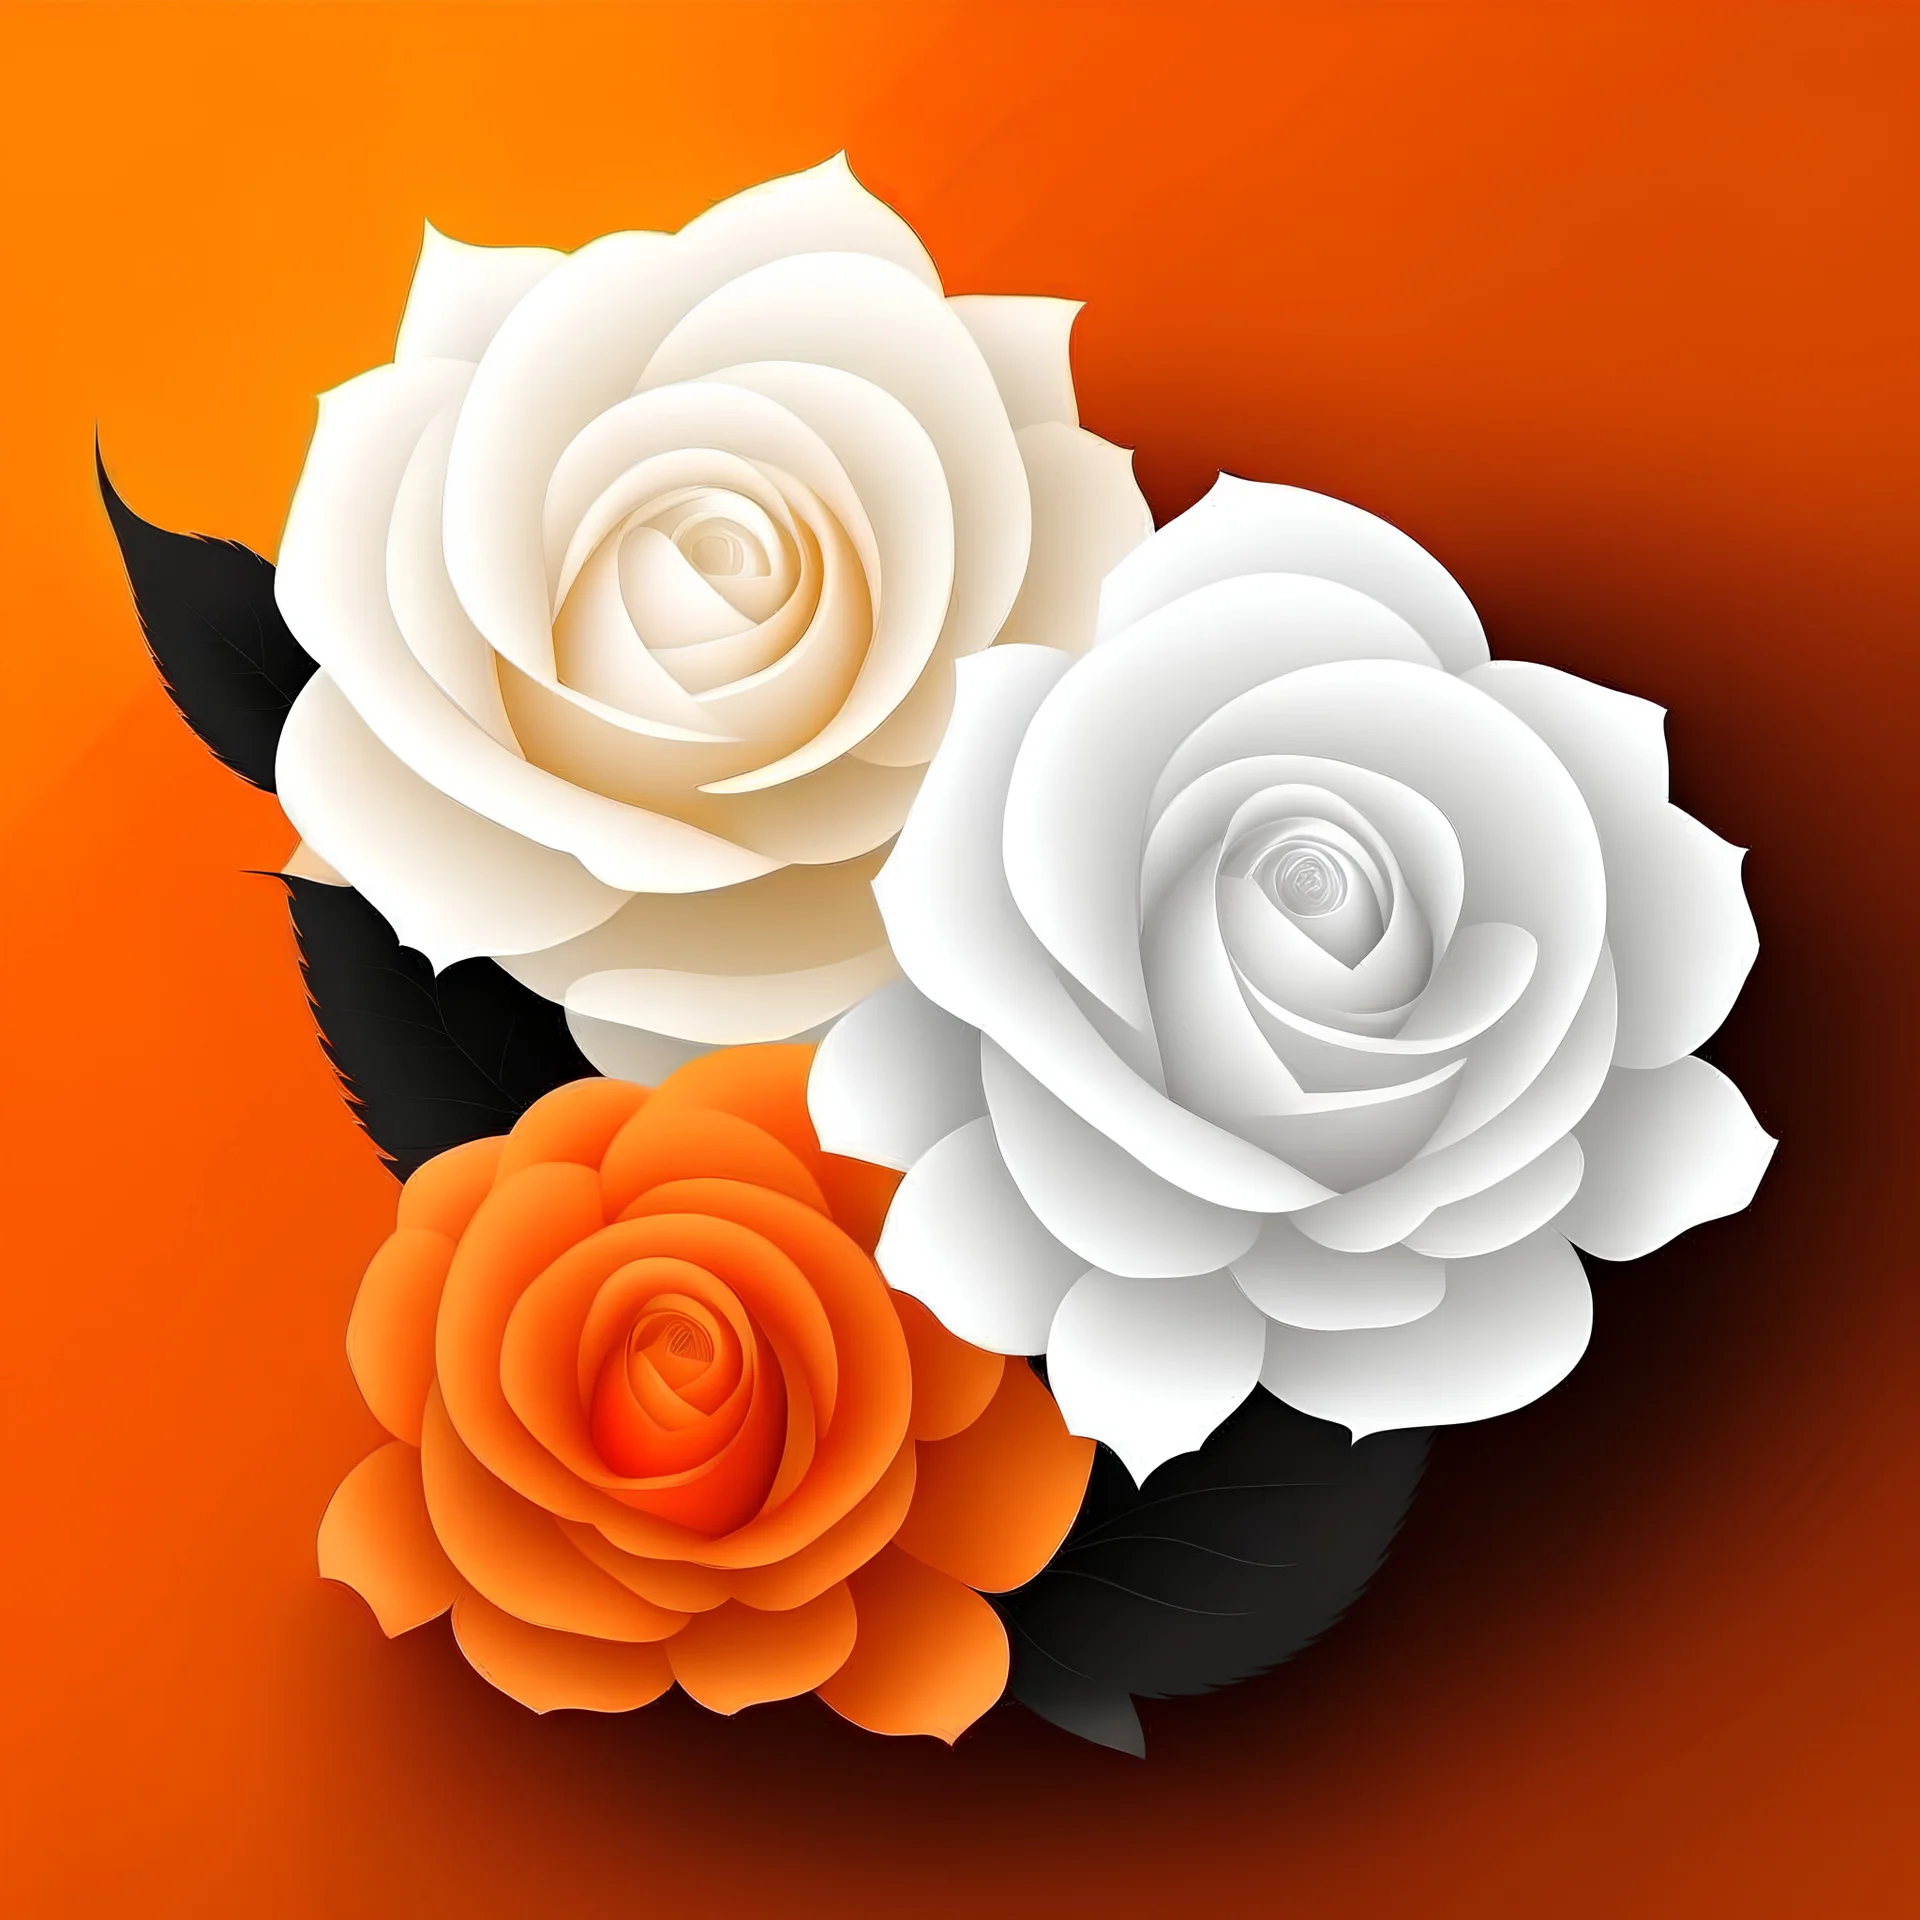 Create white rose and orange background